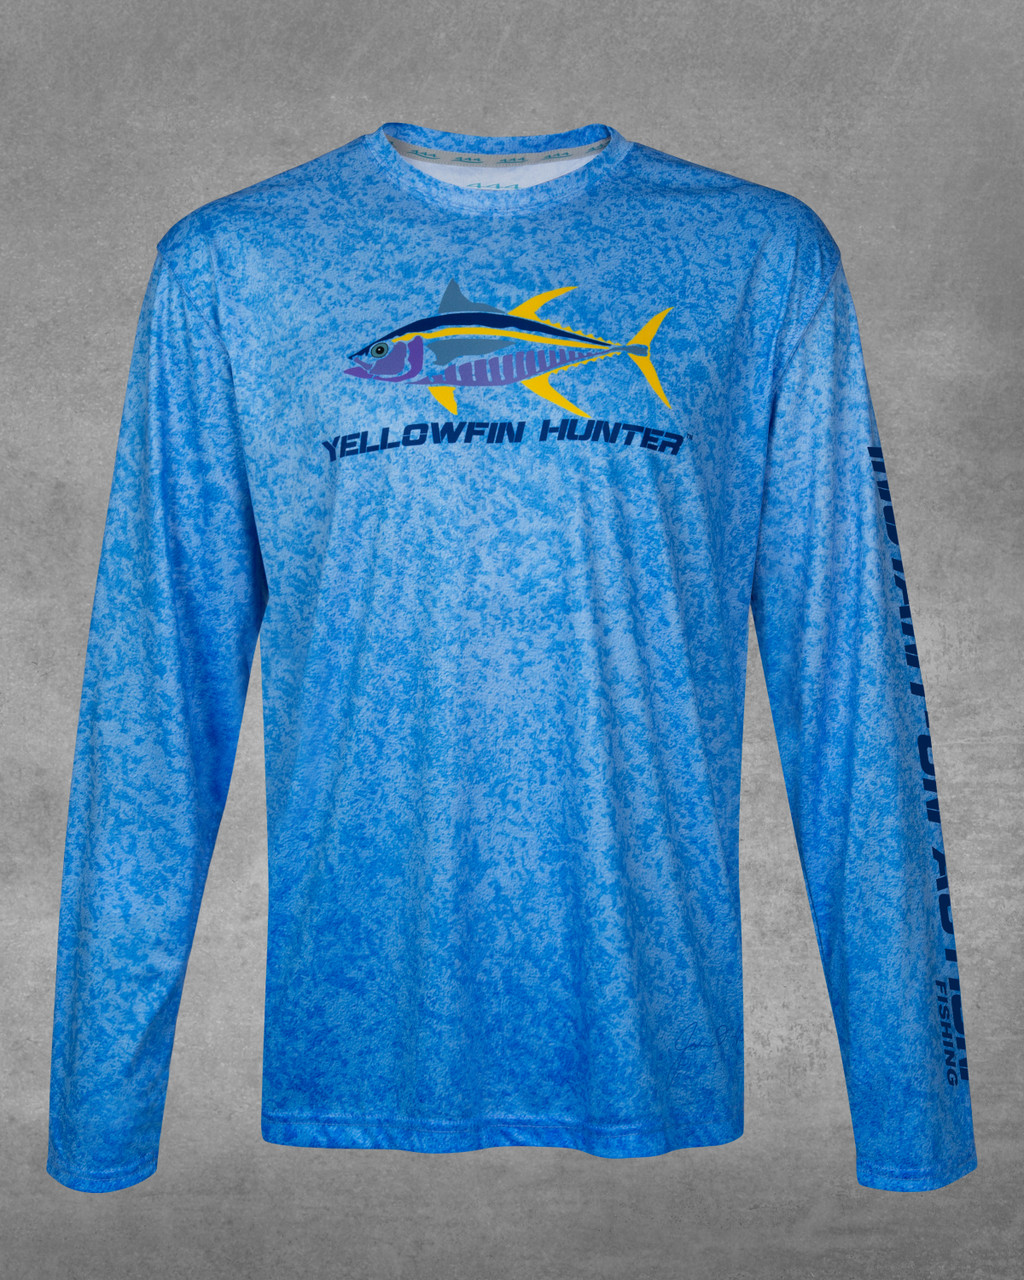 Ocean Blue Yellowfin Hunter UPF 50+ Long Sleeve Performance Shirt